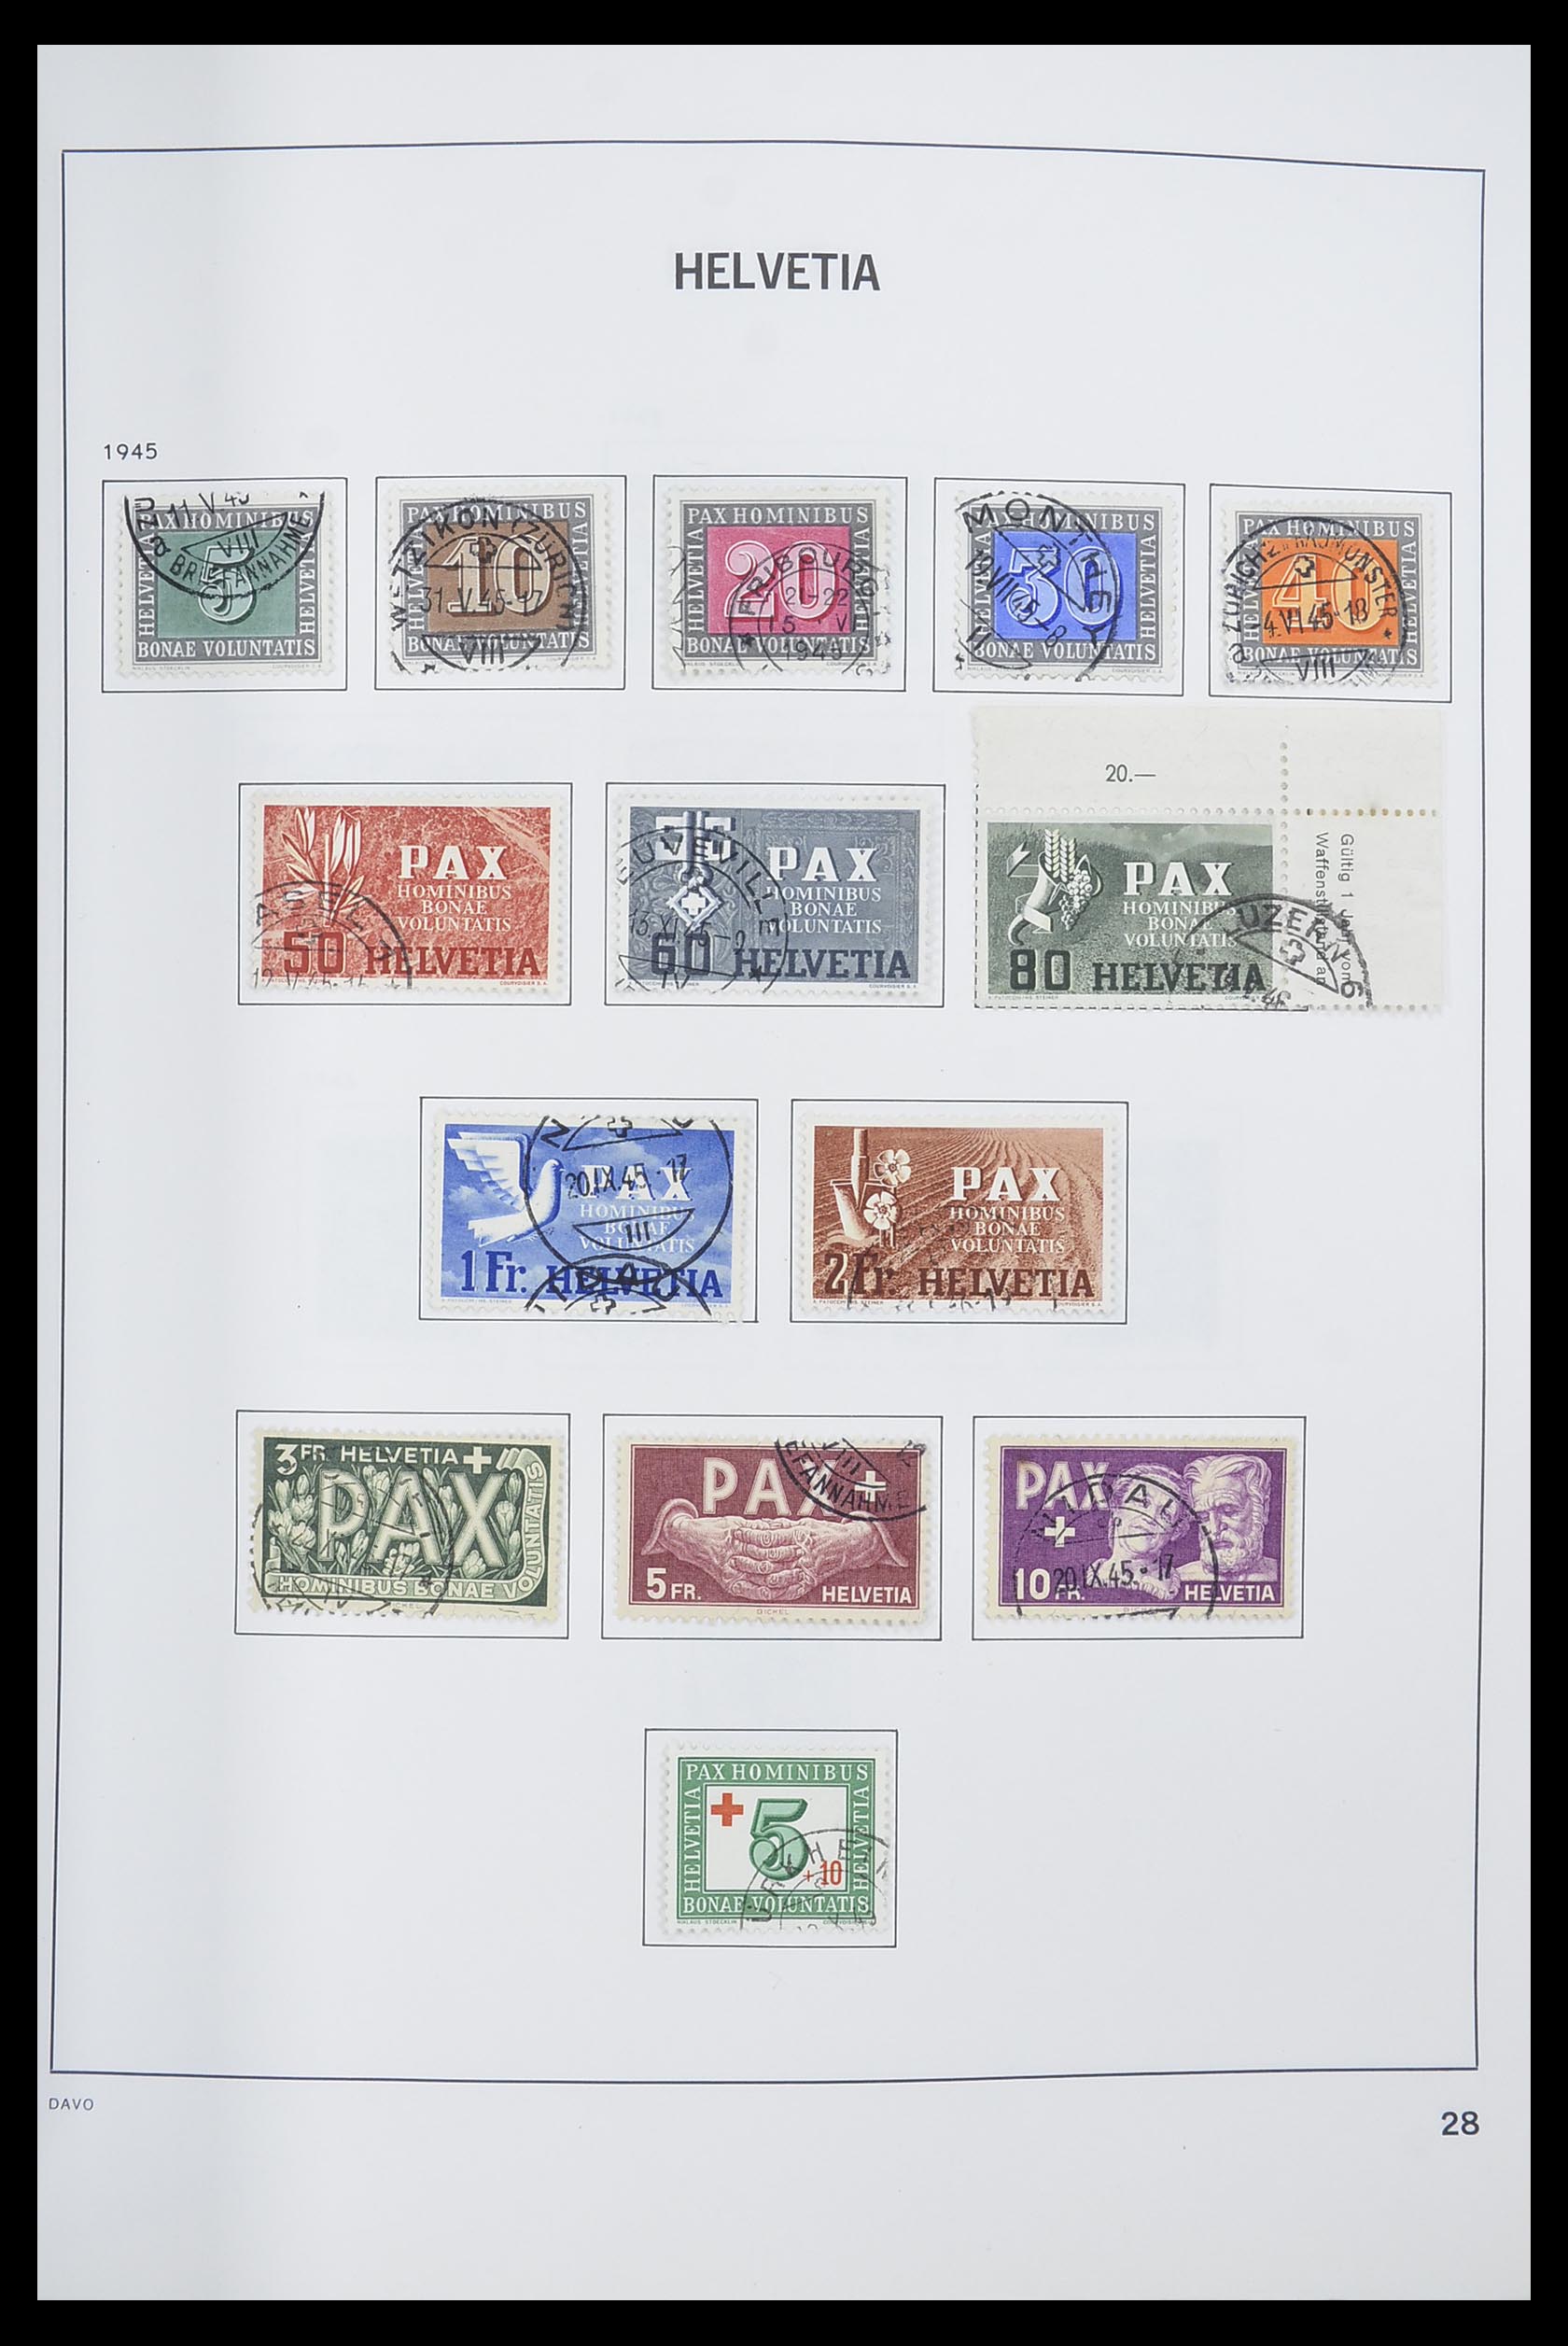 33559 029 - Stamp collection 33559 Switzerland 1850-2000.